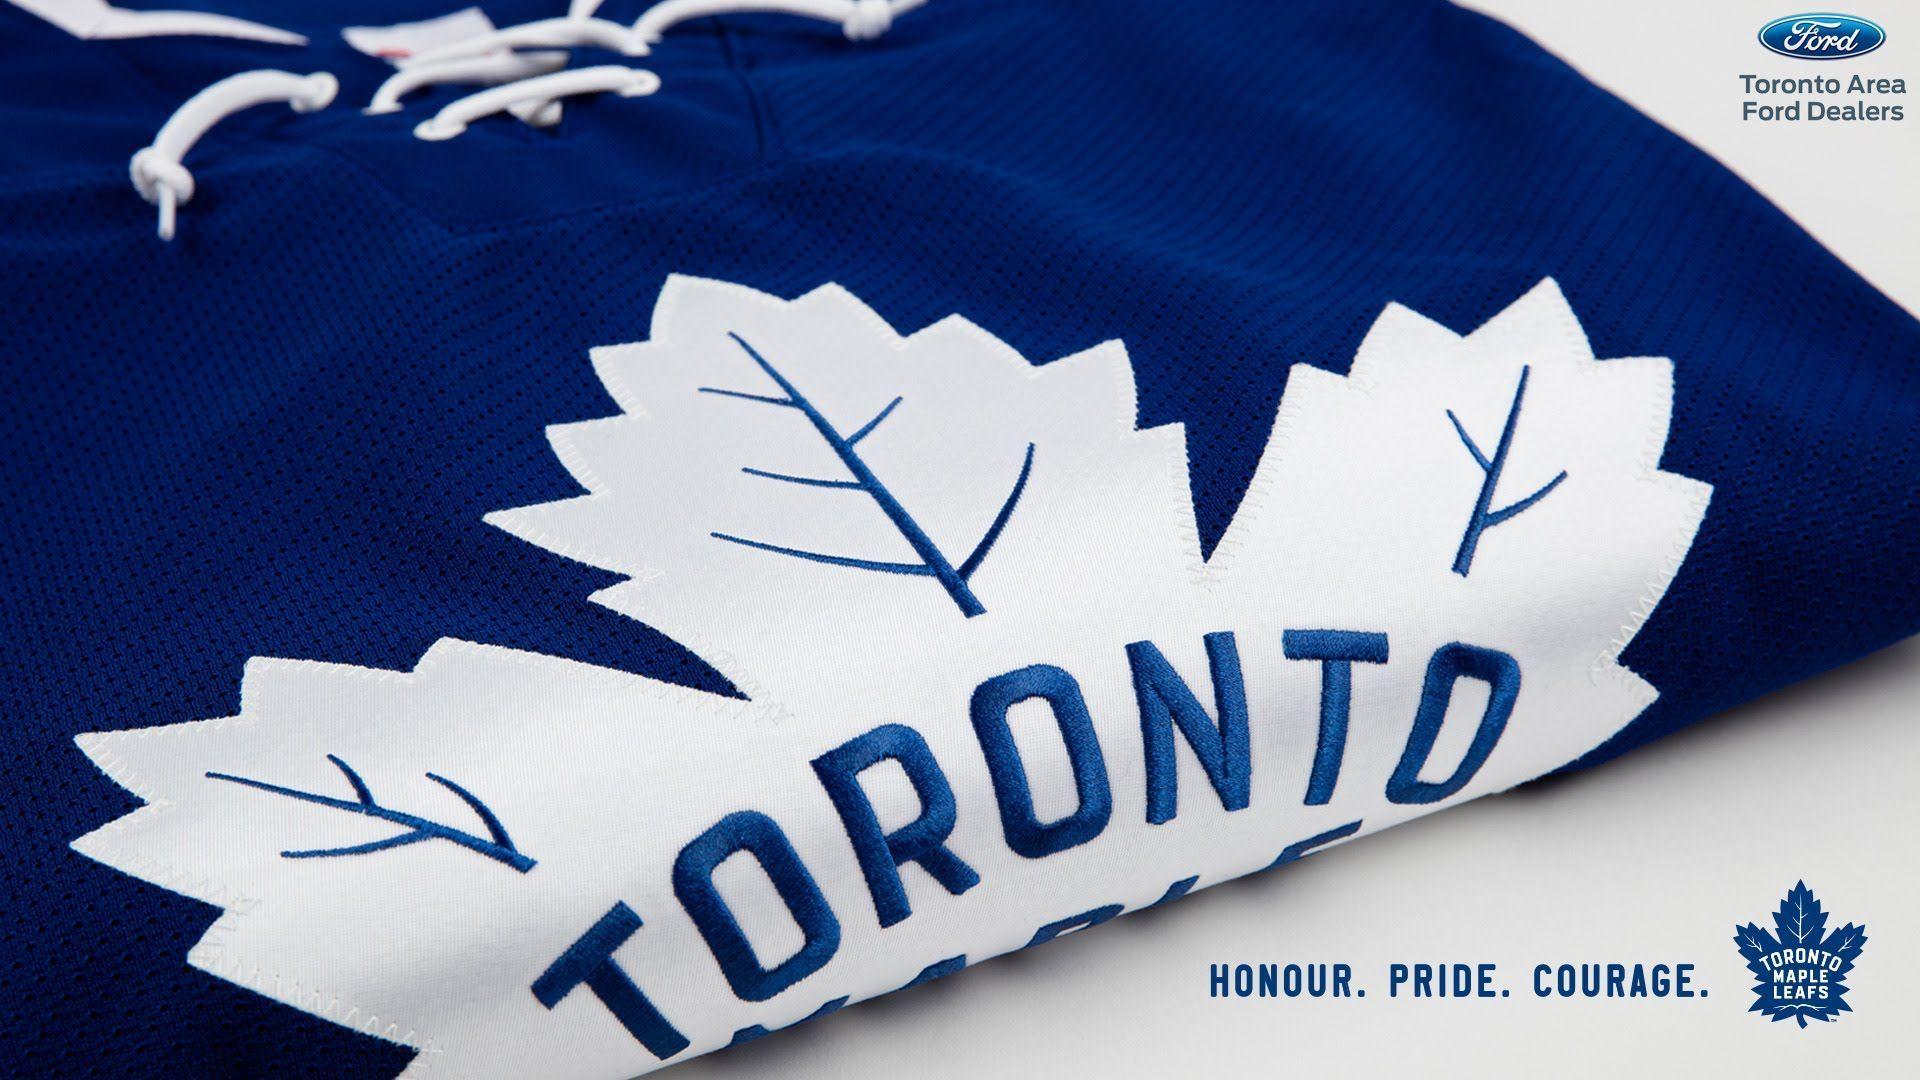 GO LEAFS GO honour pride courage  Toronto maple leafs wallpaper